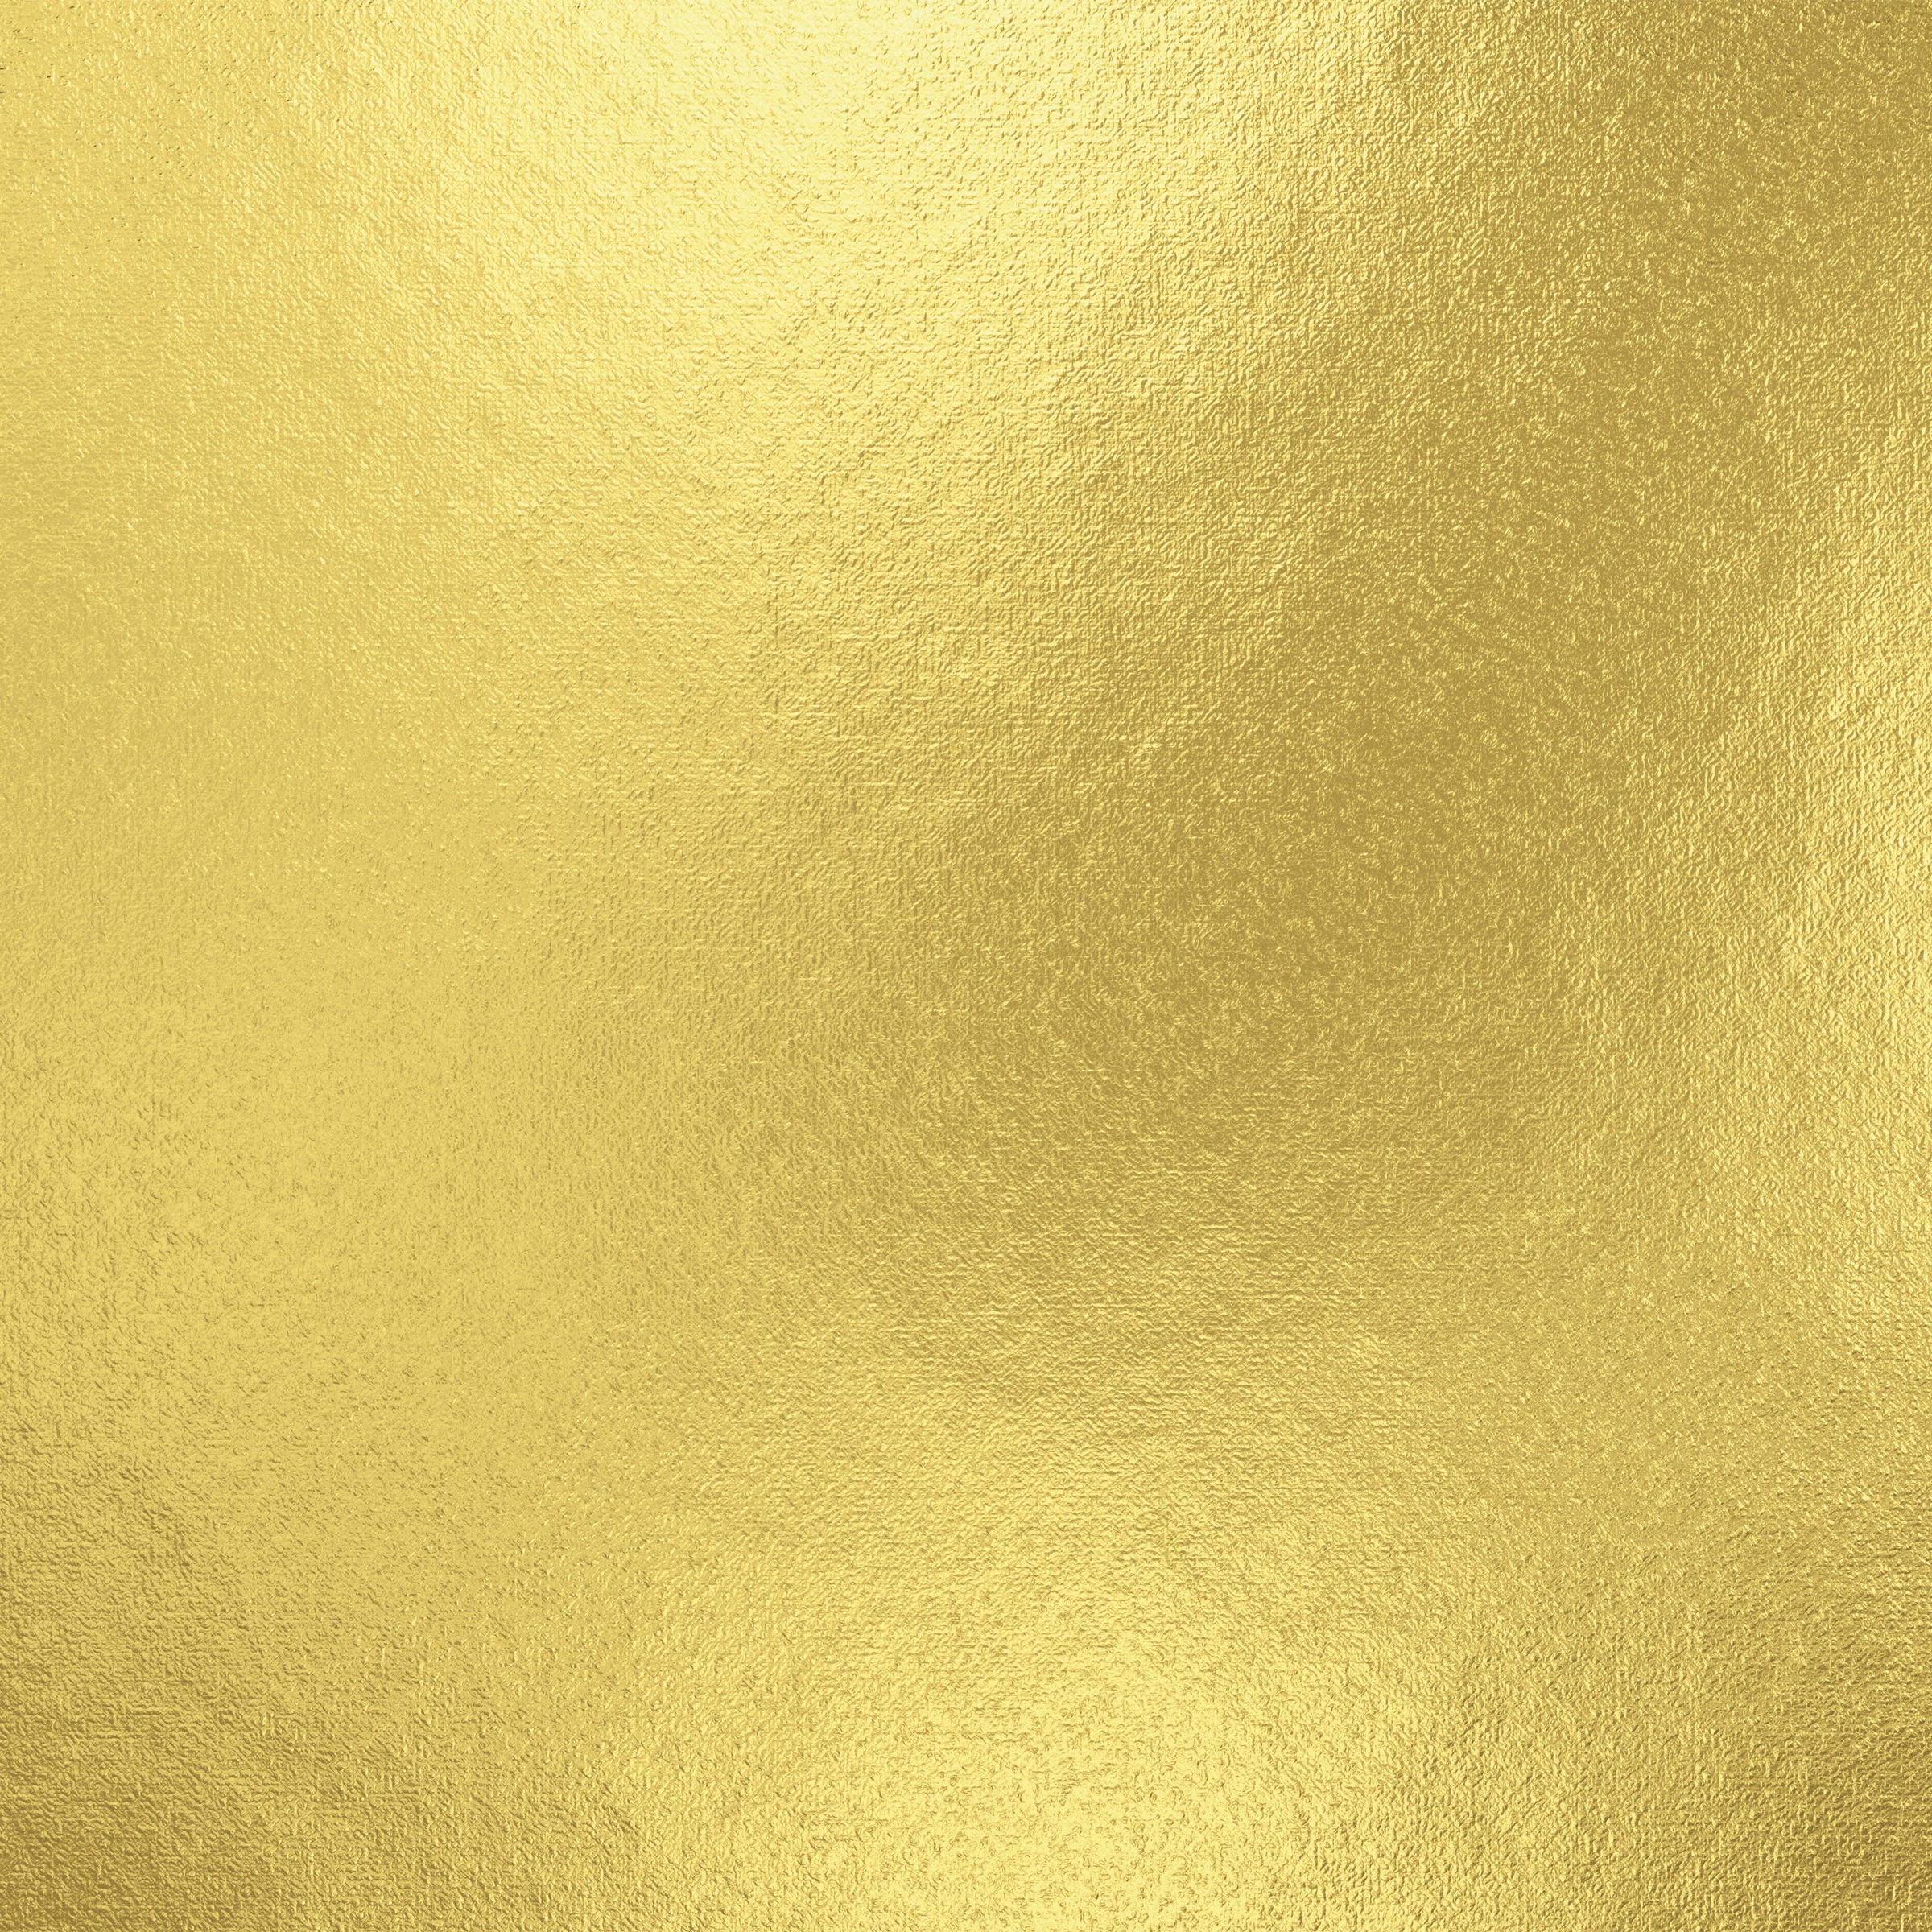 Natuurverfwinkel - Little Stars - Meubelverf Metallic Gouden Kroon - 0,25L of 0,75L - image